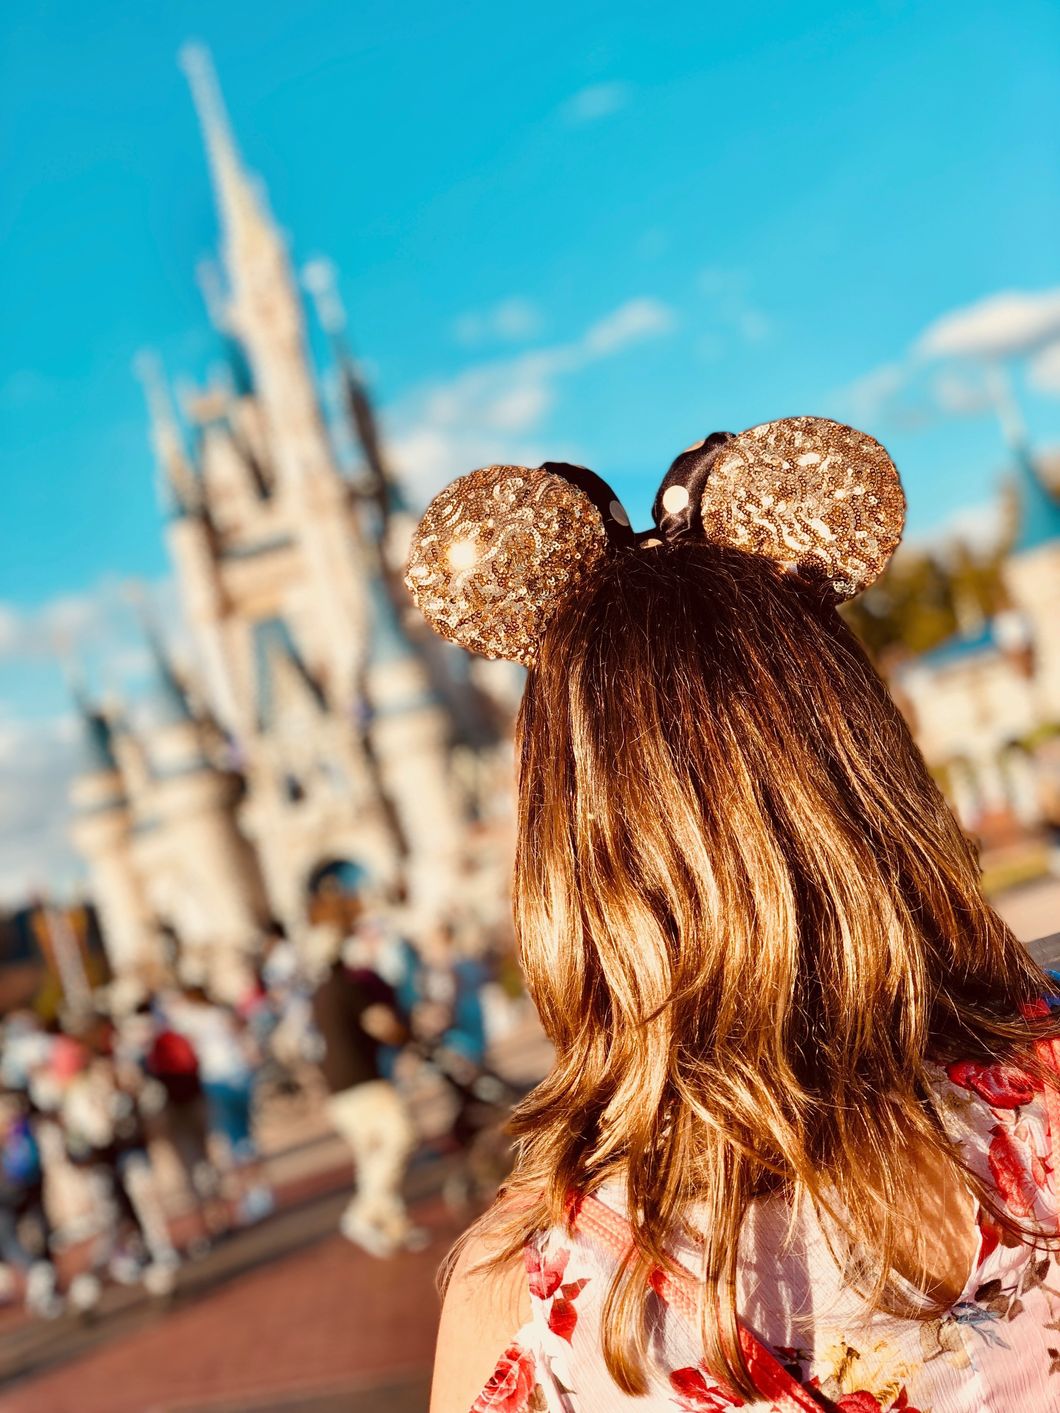 Childless Millennials Get Their Ears At Disney, Too